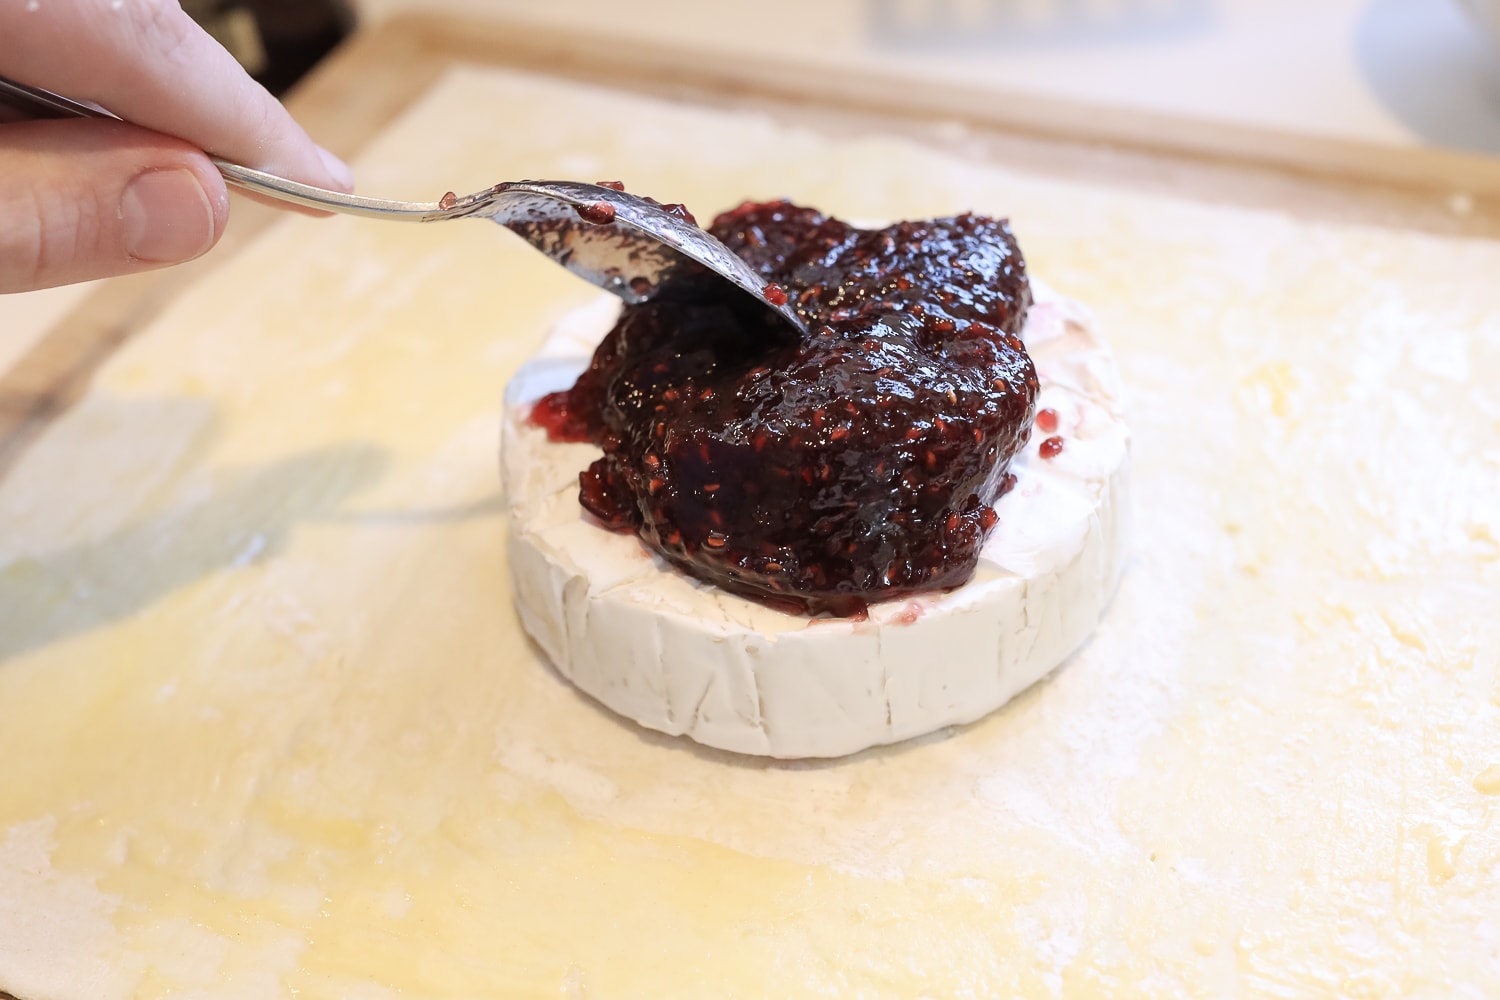 Baked brie with raspberry jam recipe by blogger Stephanie Ziajka on Diary of a Debutante